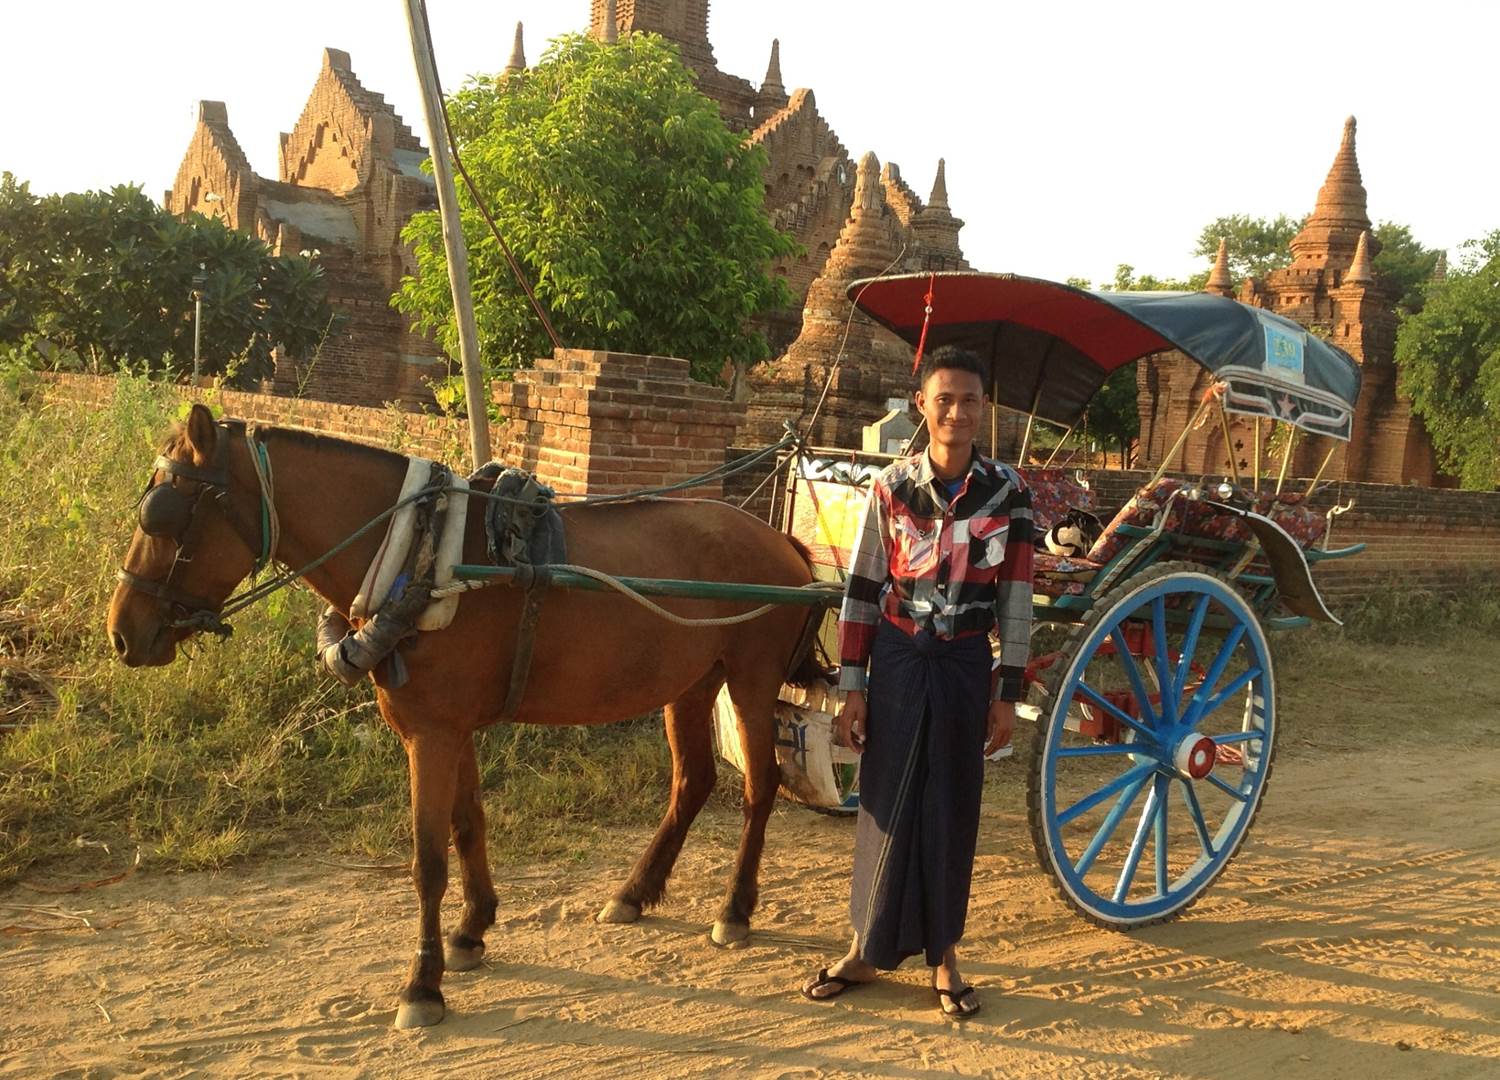 A horsecart for Naing Naing in Bangan - ein Reisebericht